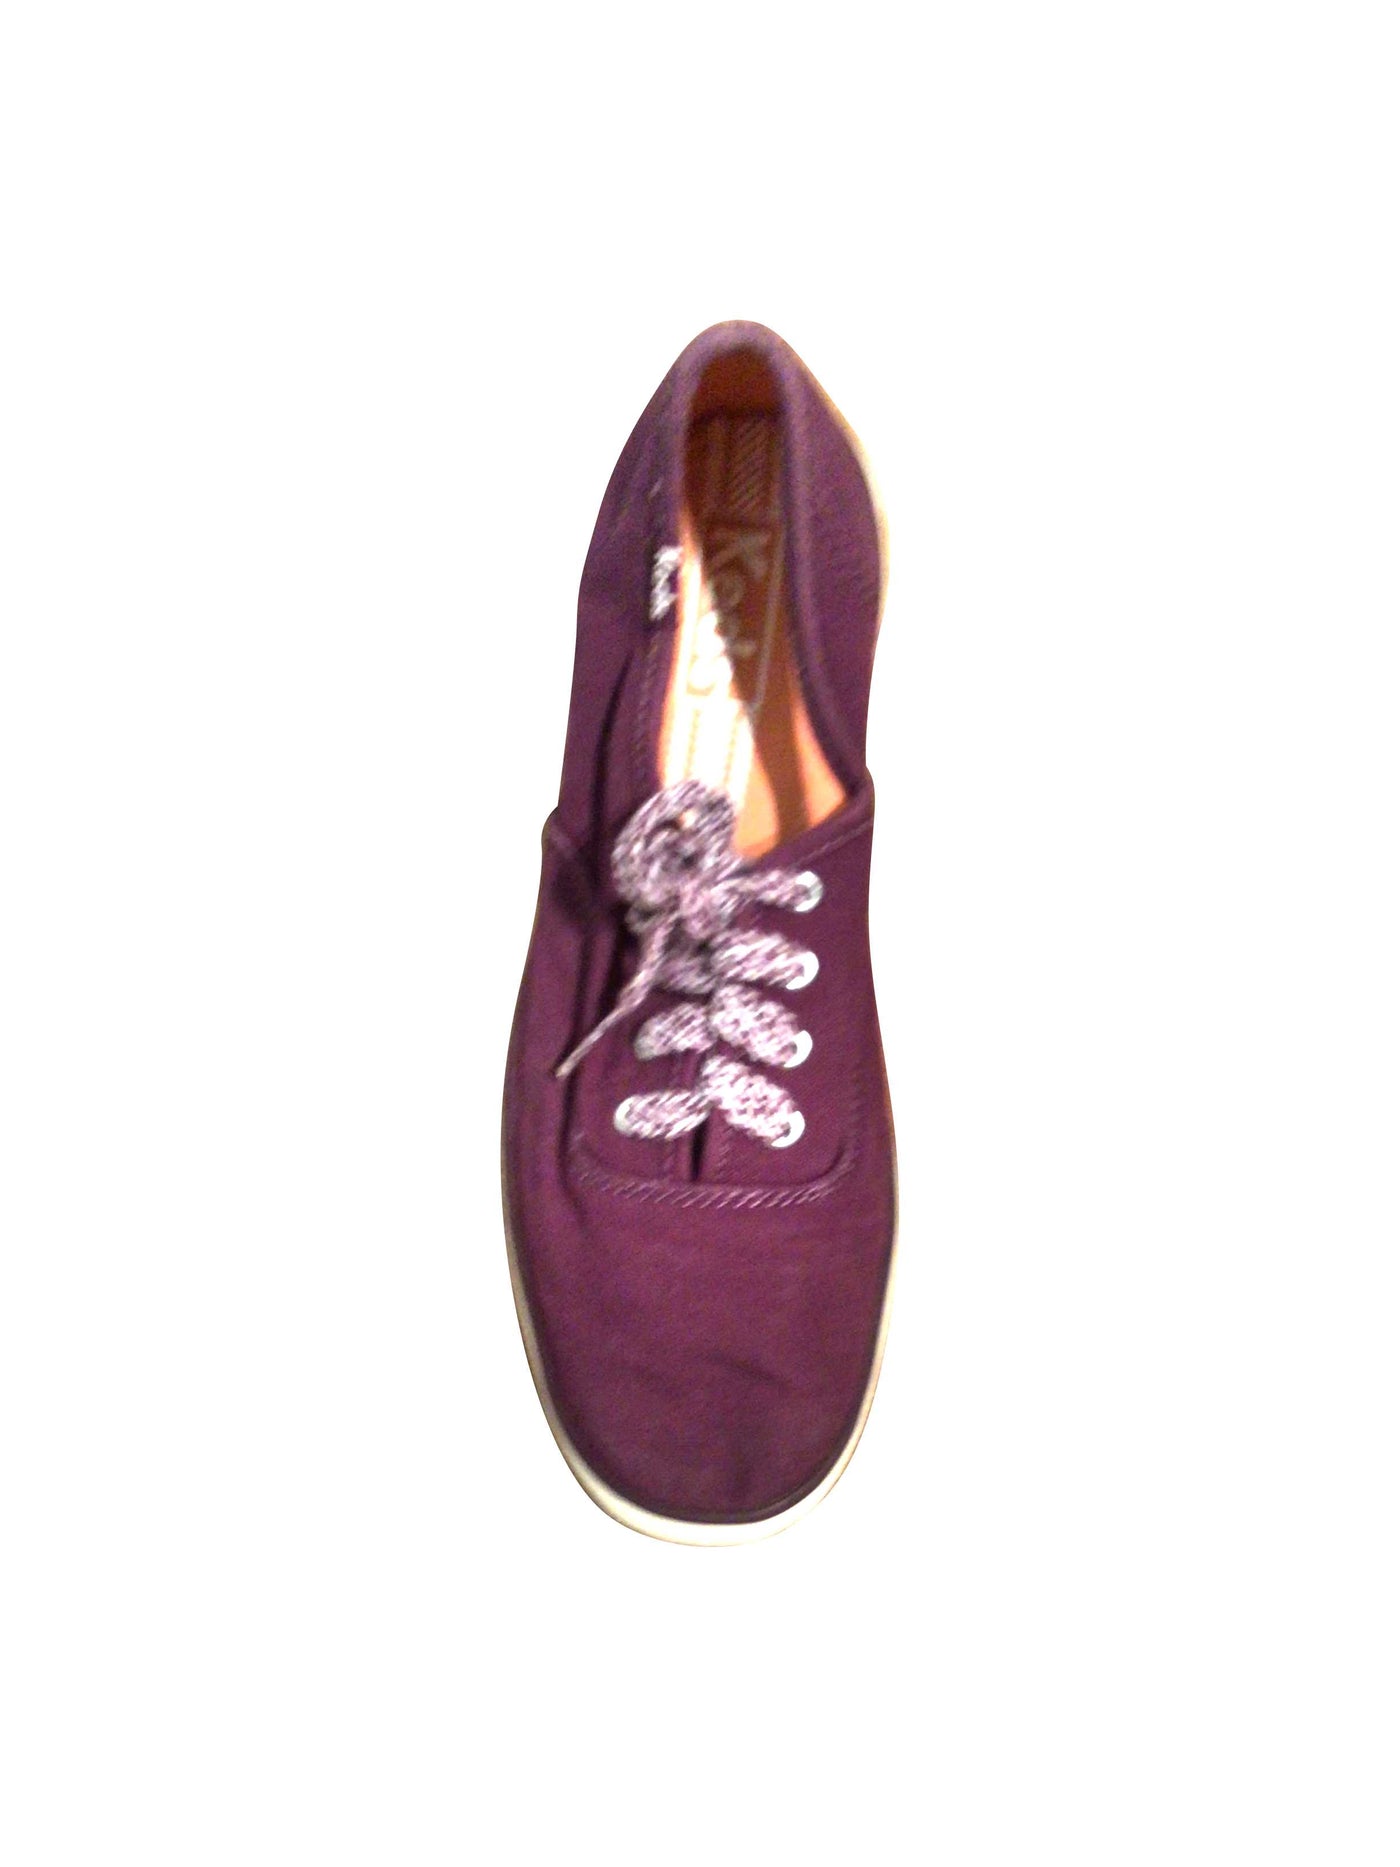 KEDS Flats Shoes in Purple  -  6.5  9.74 Koop